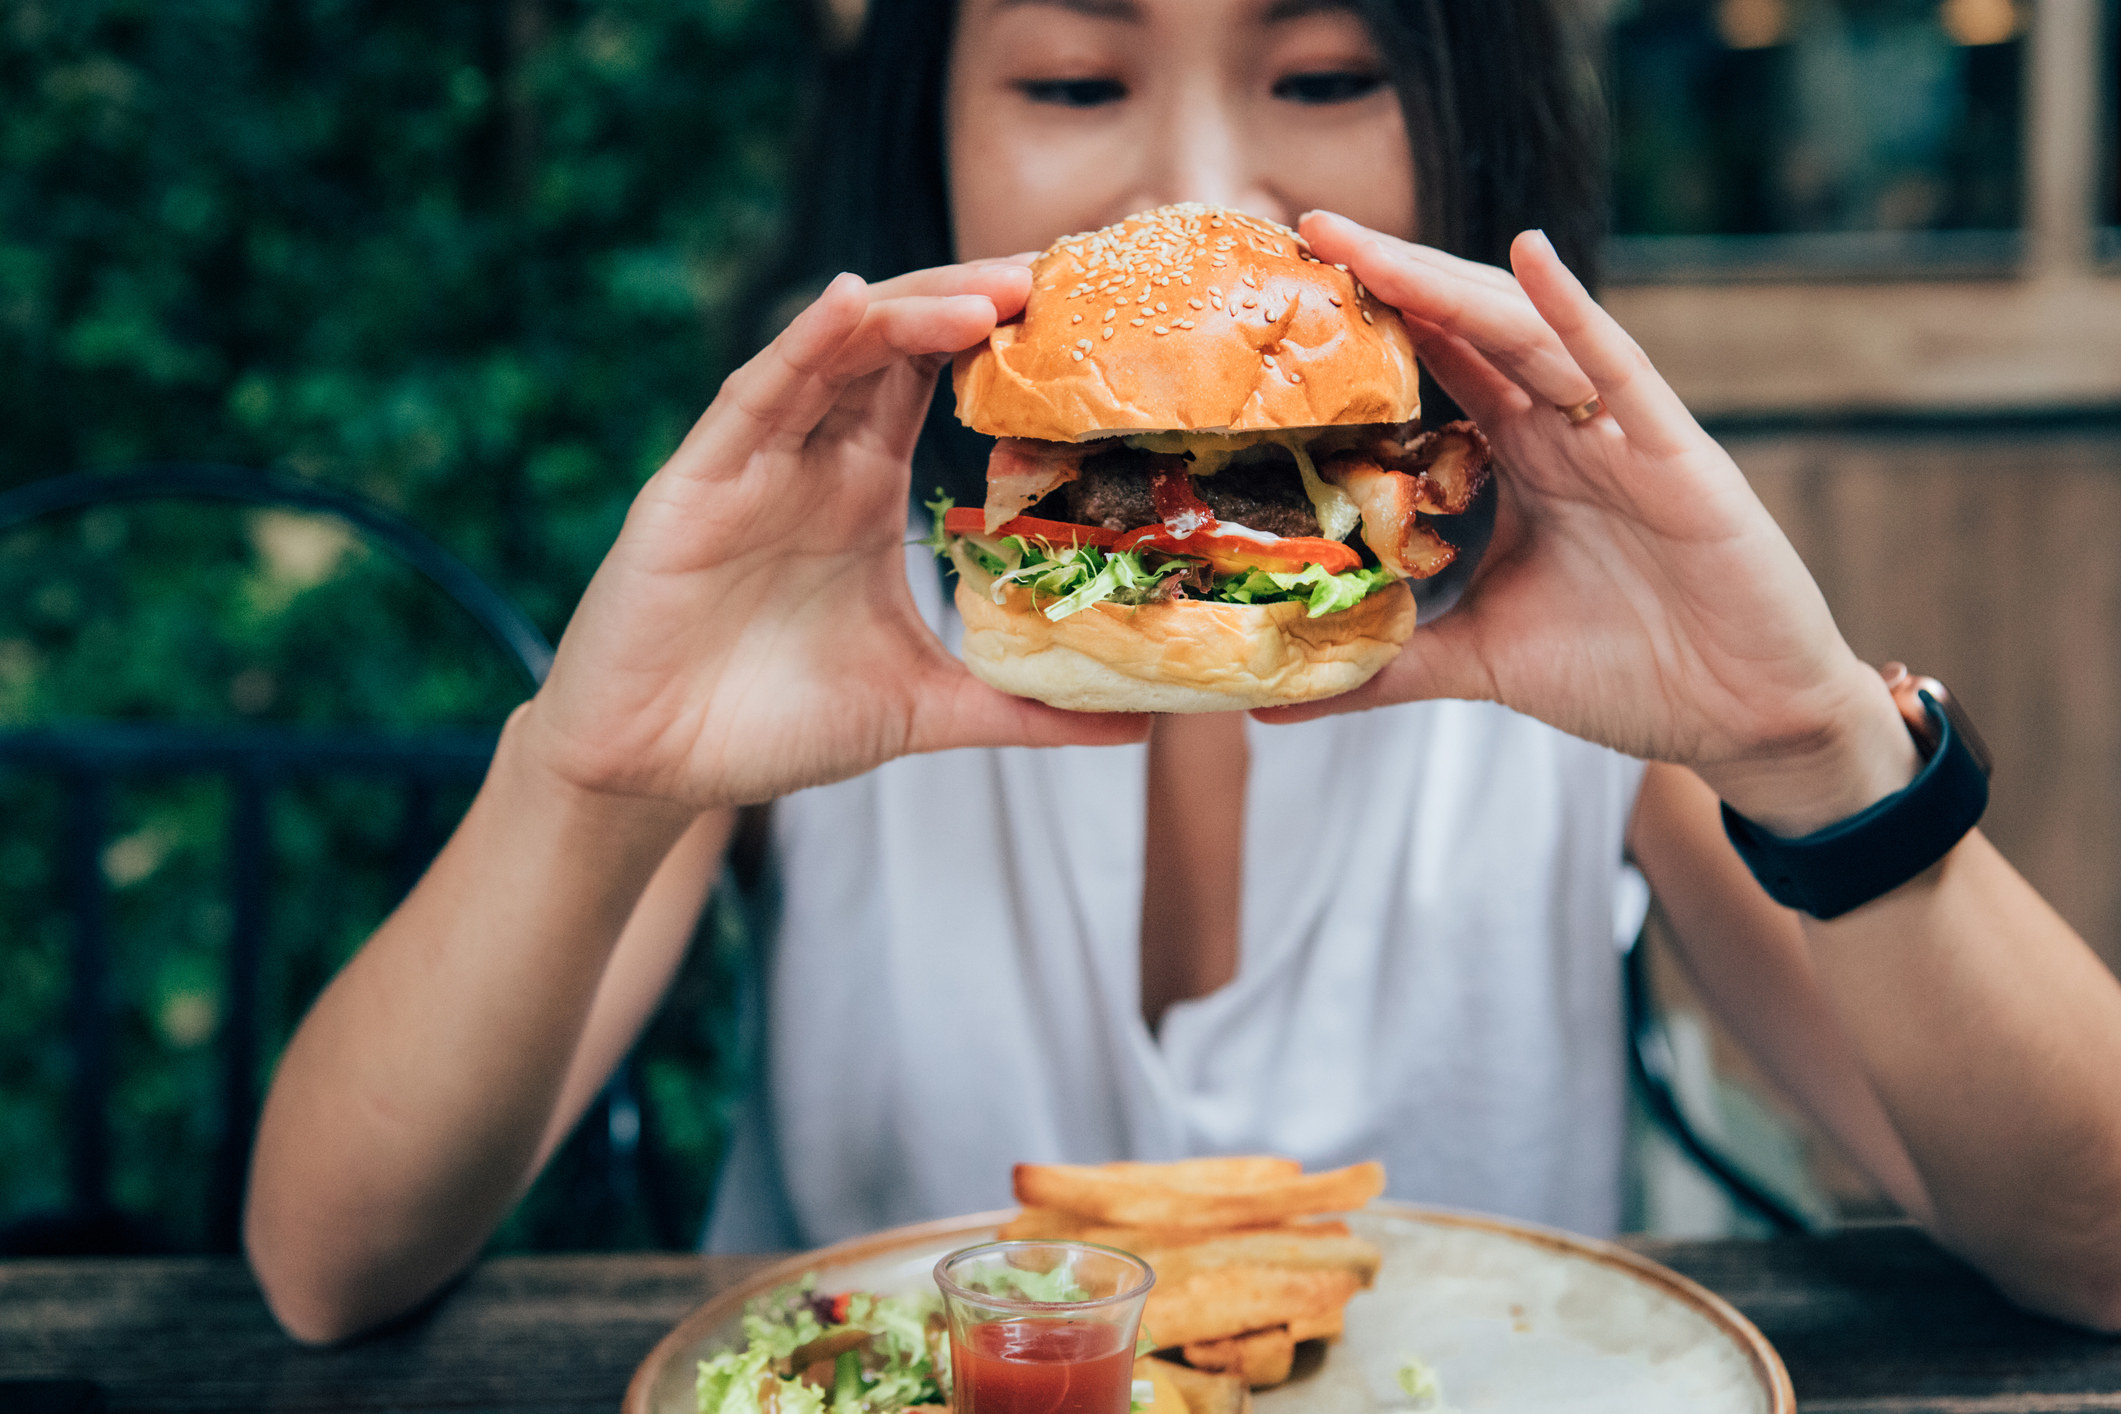 A woman holding up a burger